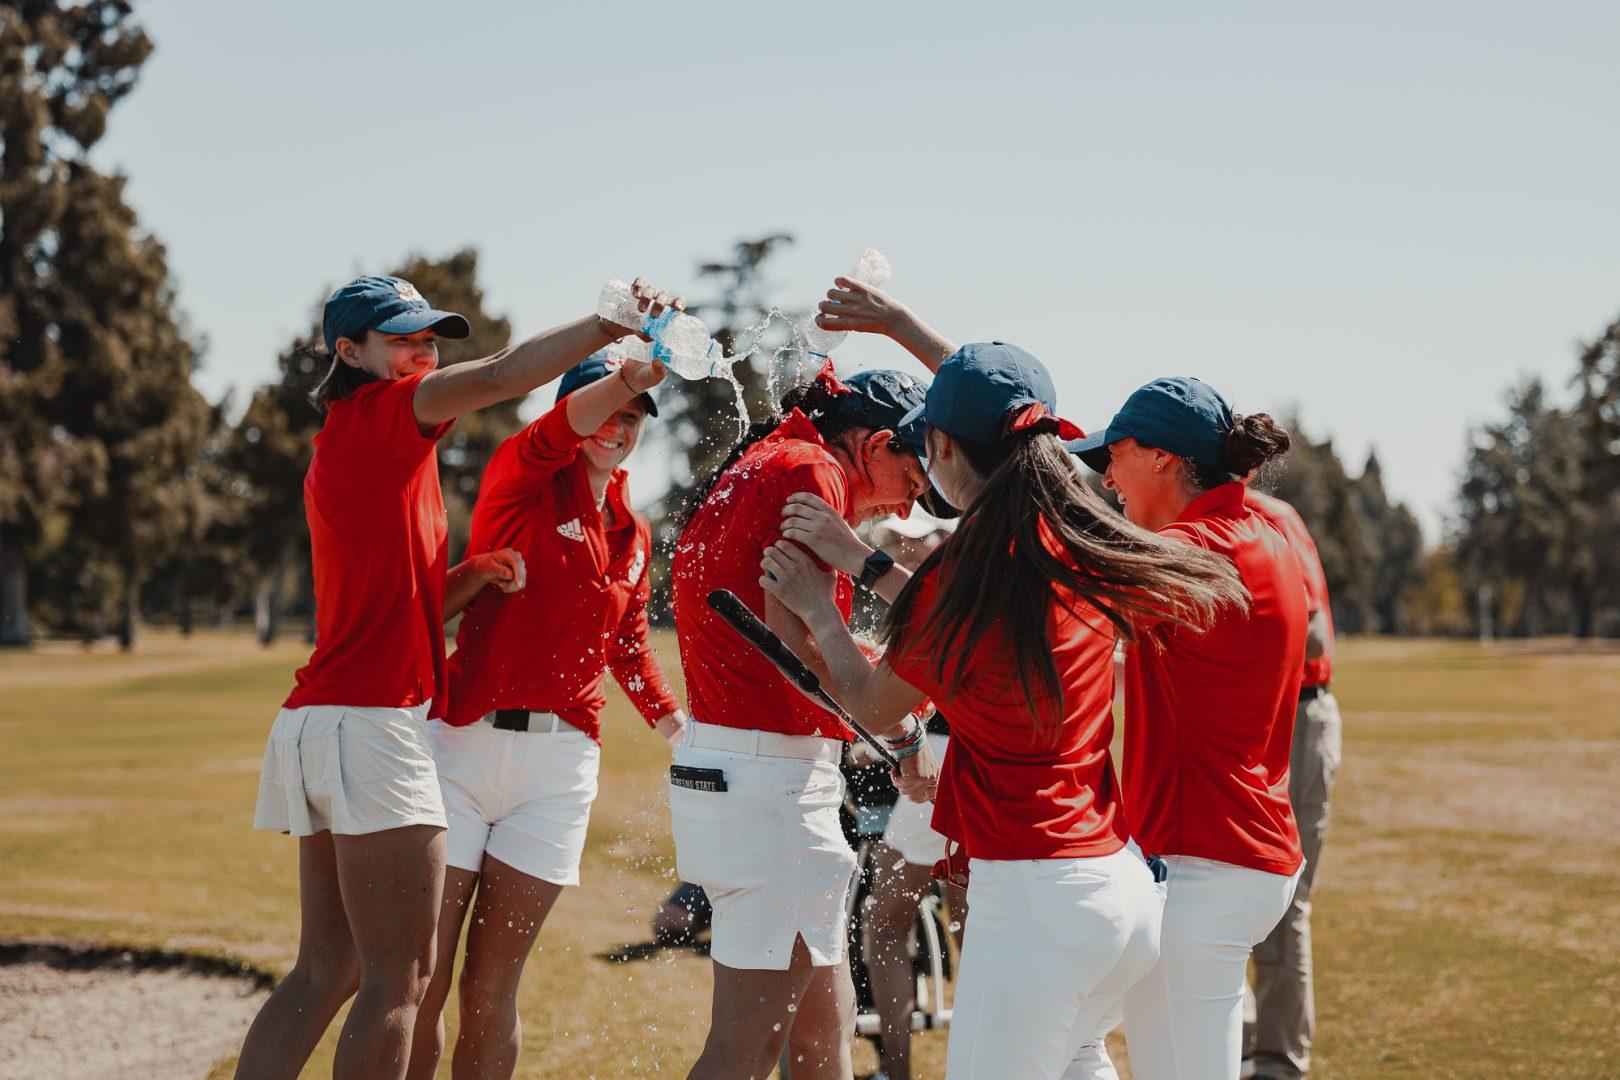 Fresno State womens golf team celebrates Jessica Hall winning individual
champion at the 2022 Fresno State Classic Tournament. (Kayla Barber/ Fresno State Athletics)